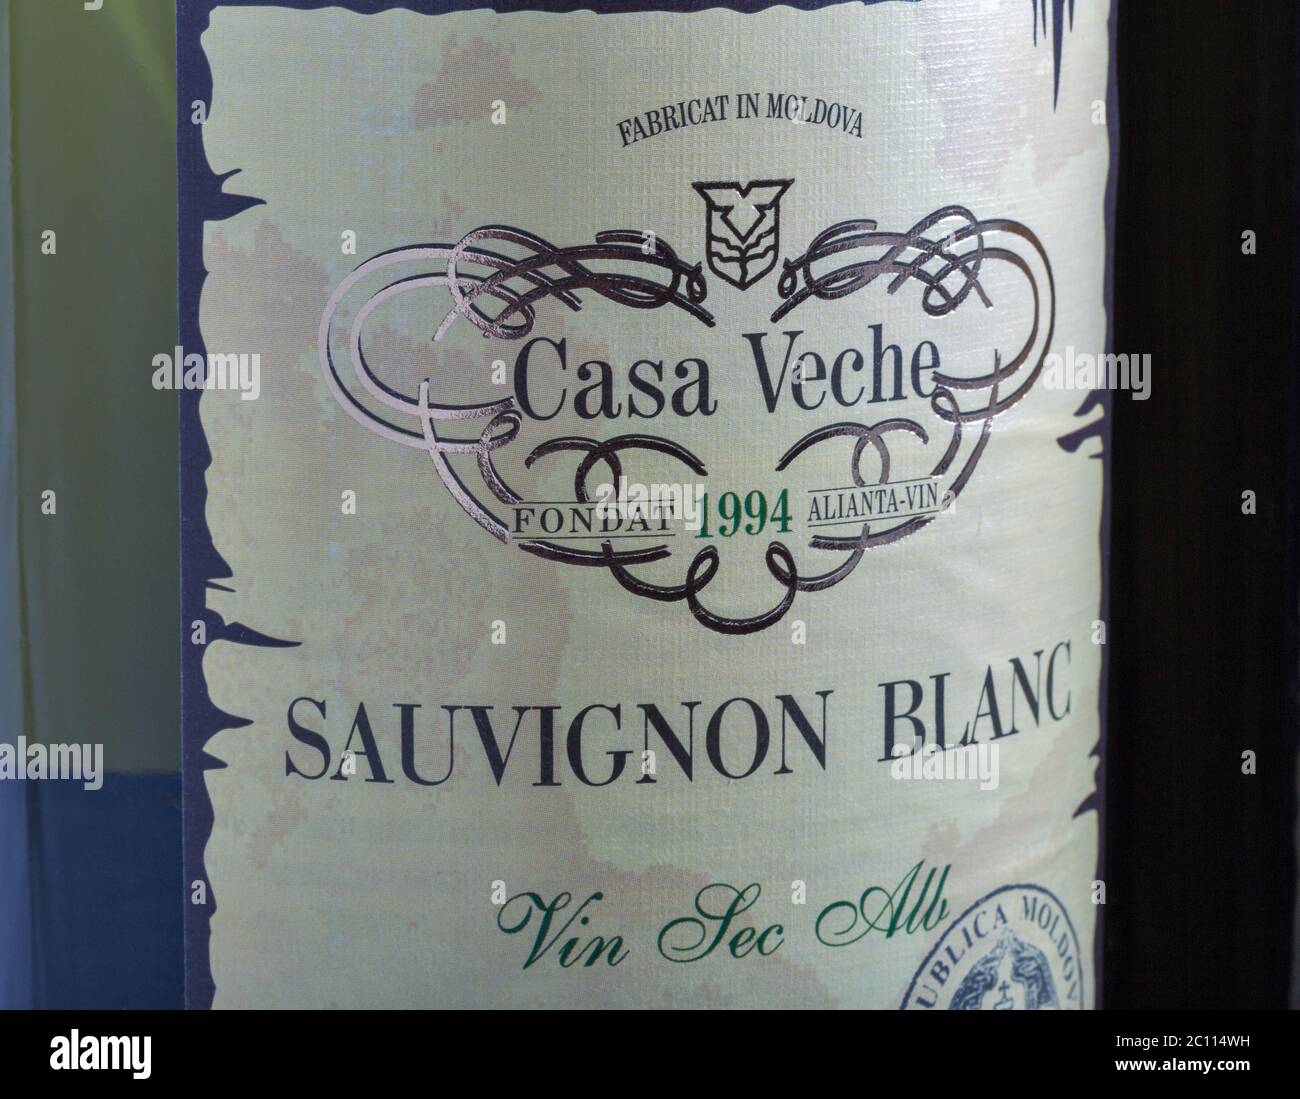 KYIV, UKRAINE - MAY 15, 2020: Cabernet Sauvignon Blanc wine bottle label from Casa Veche Moldavian winery closeup Stock Photo